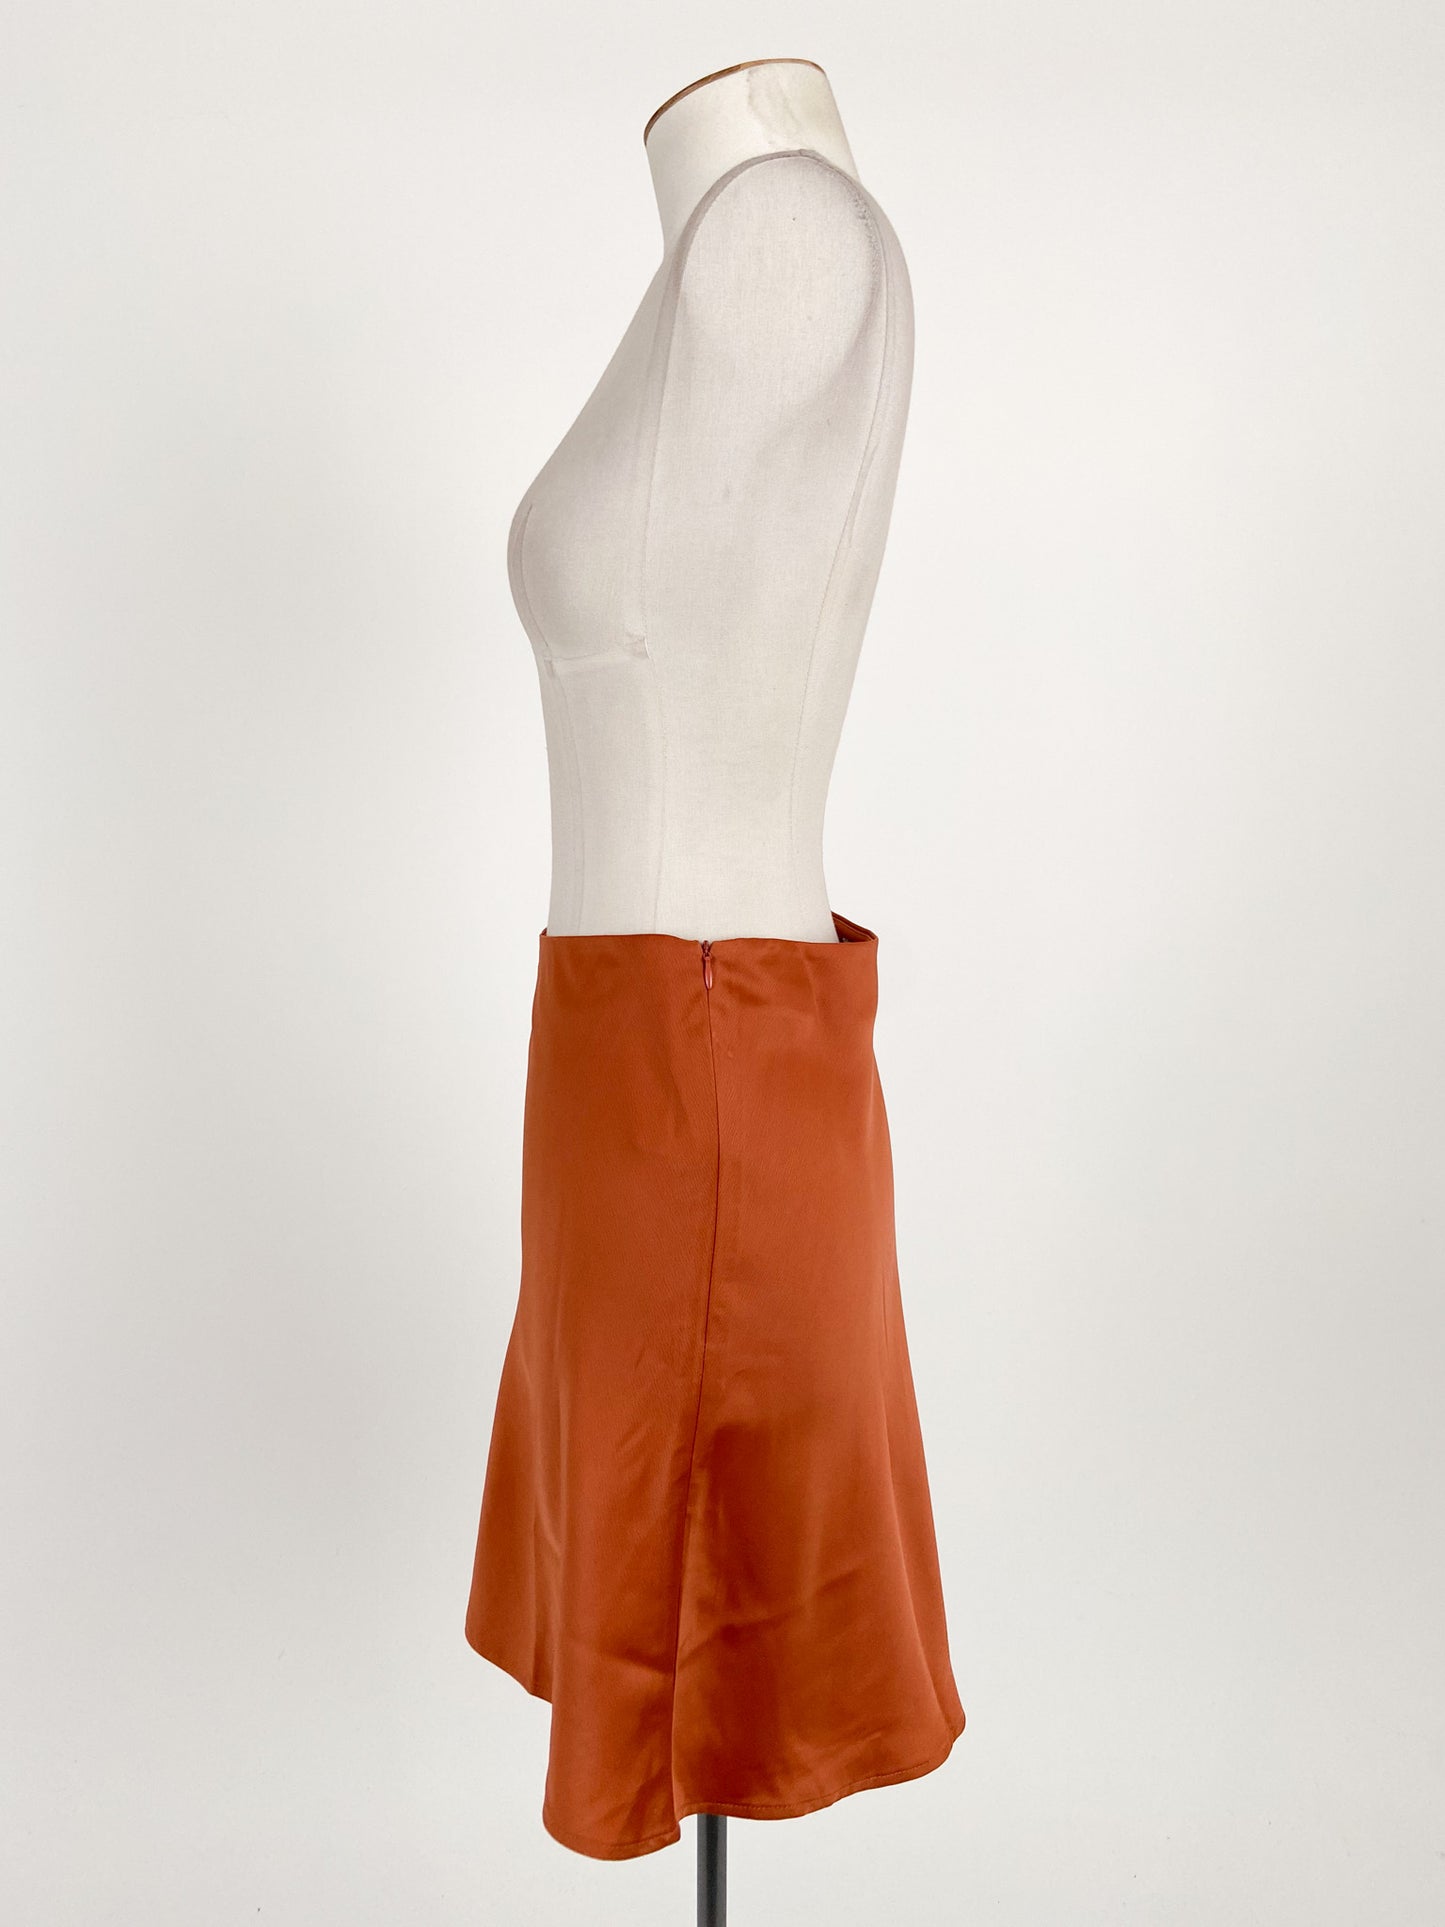 Seven Wonders | Orange Cocktail Skirt | Size 8